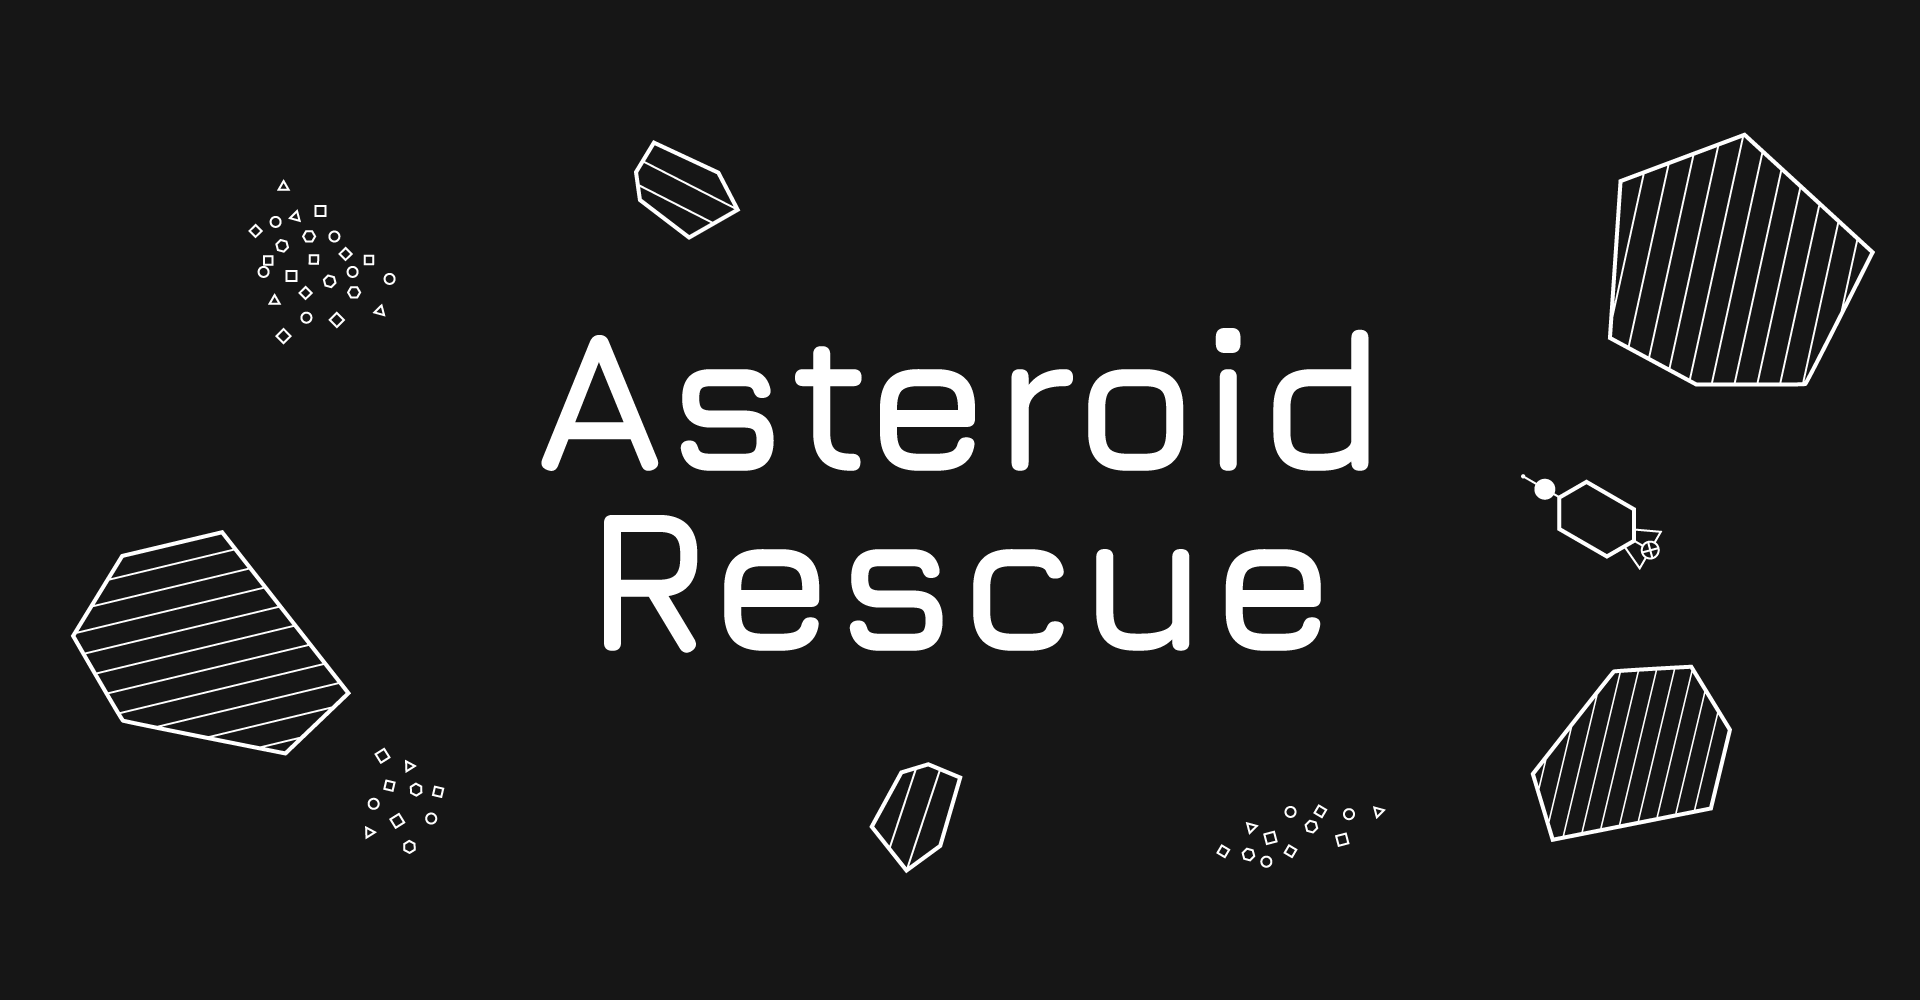 Asteroid Rescue